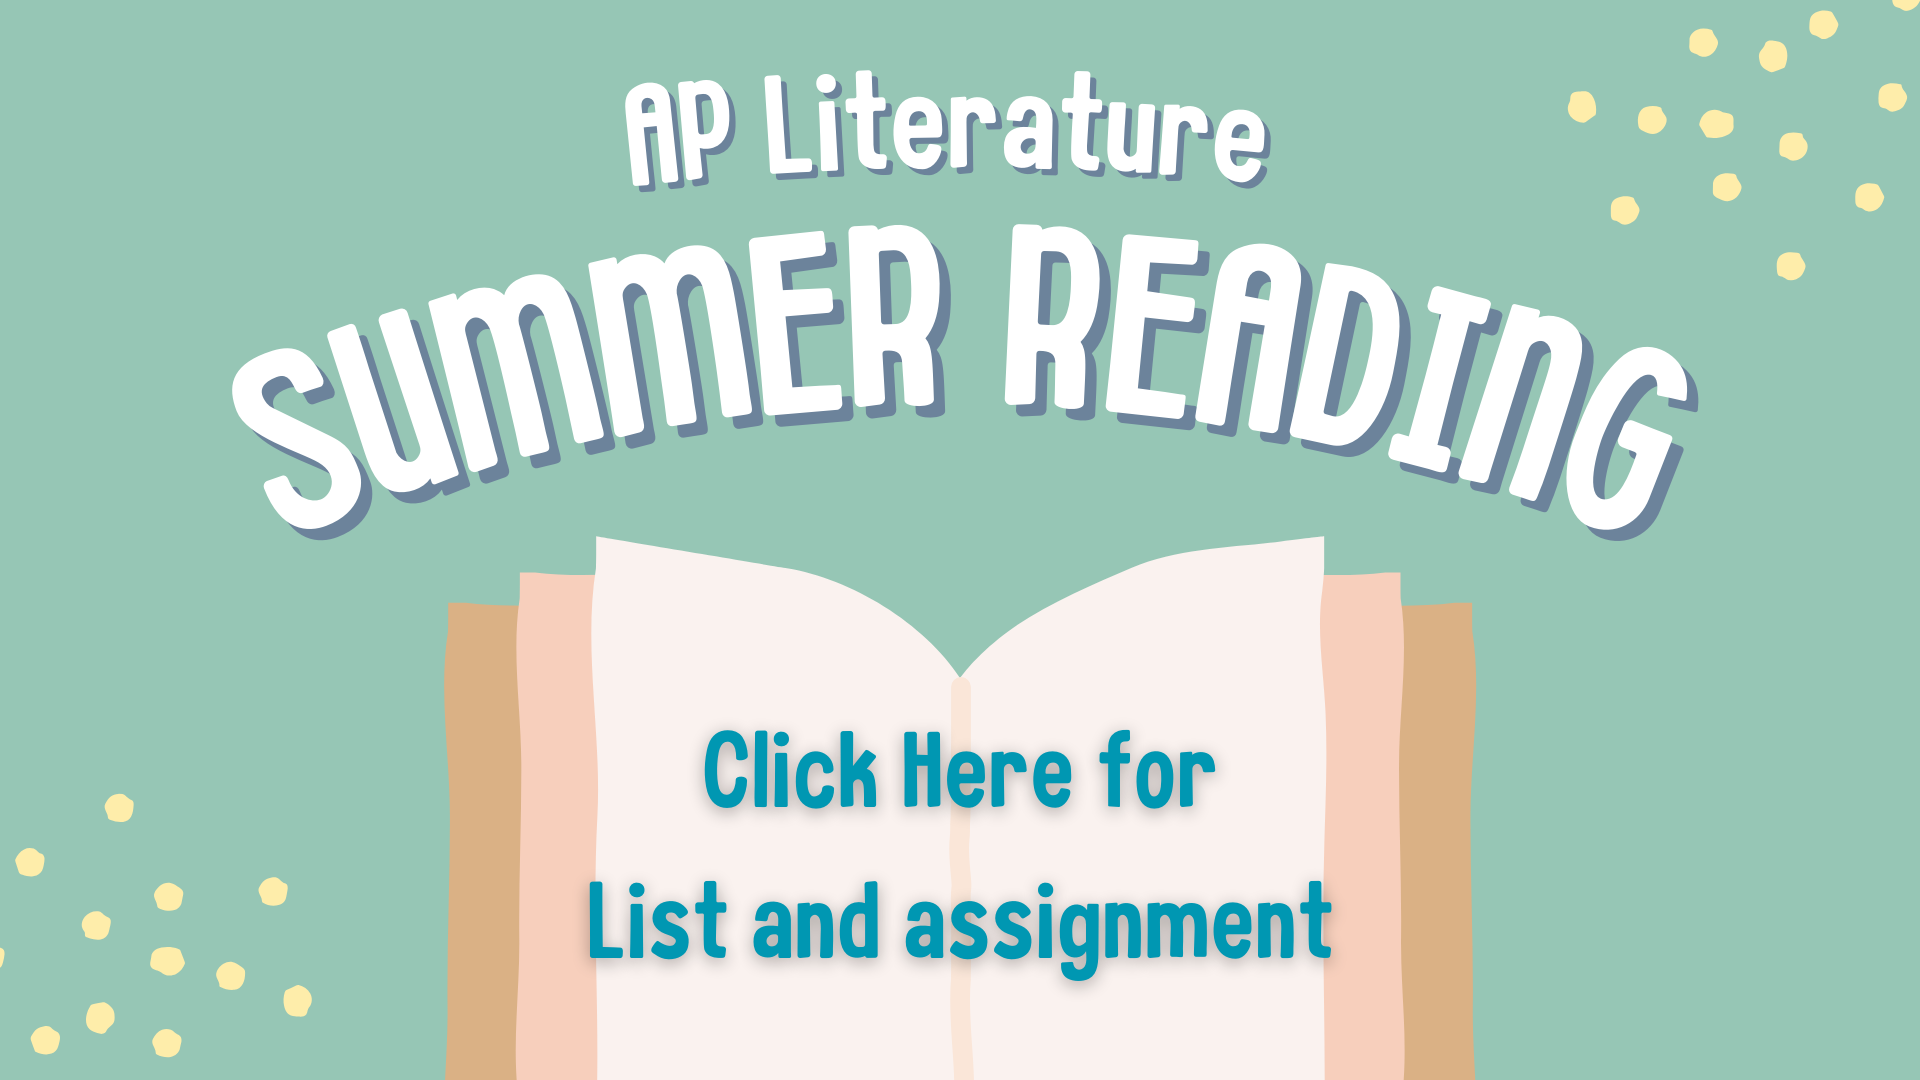 AP Literature Summer Reading. Click here